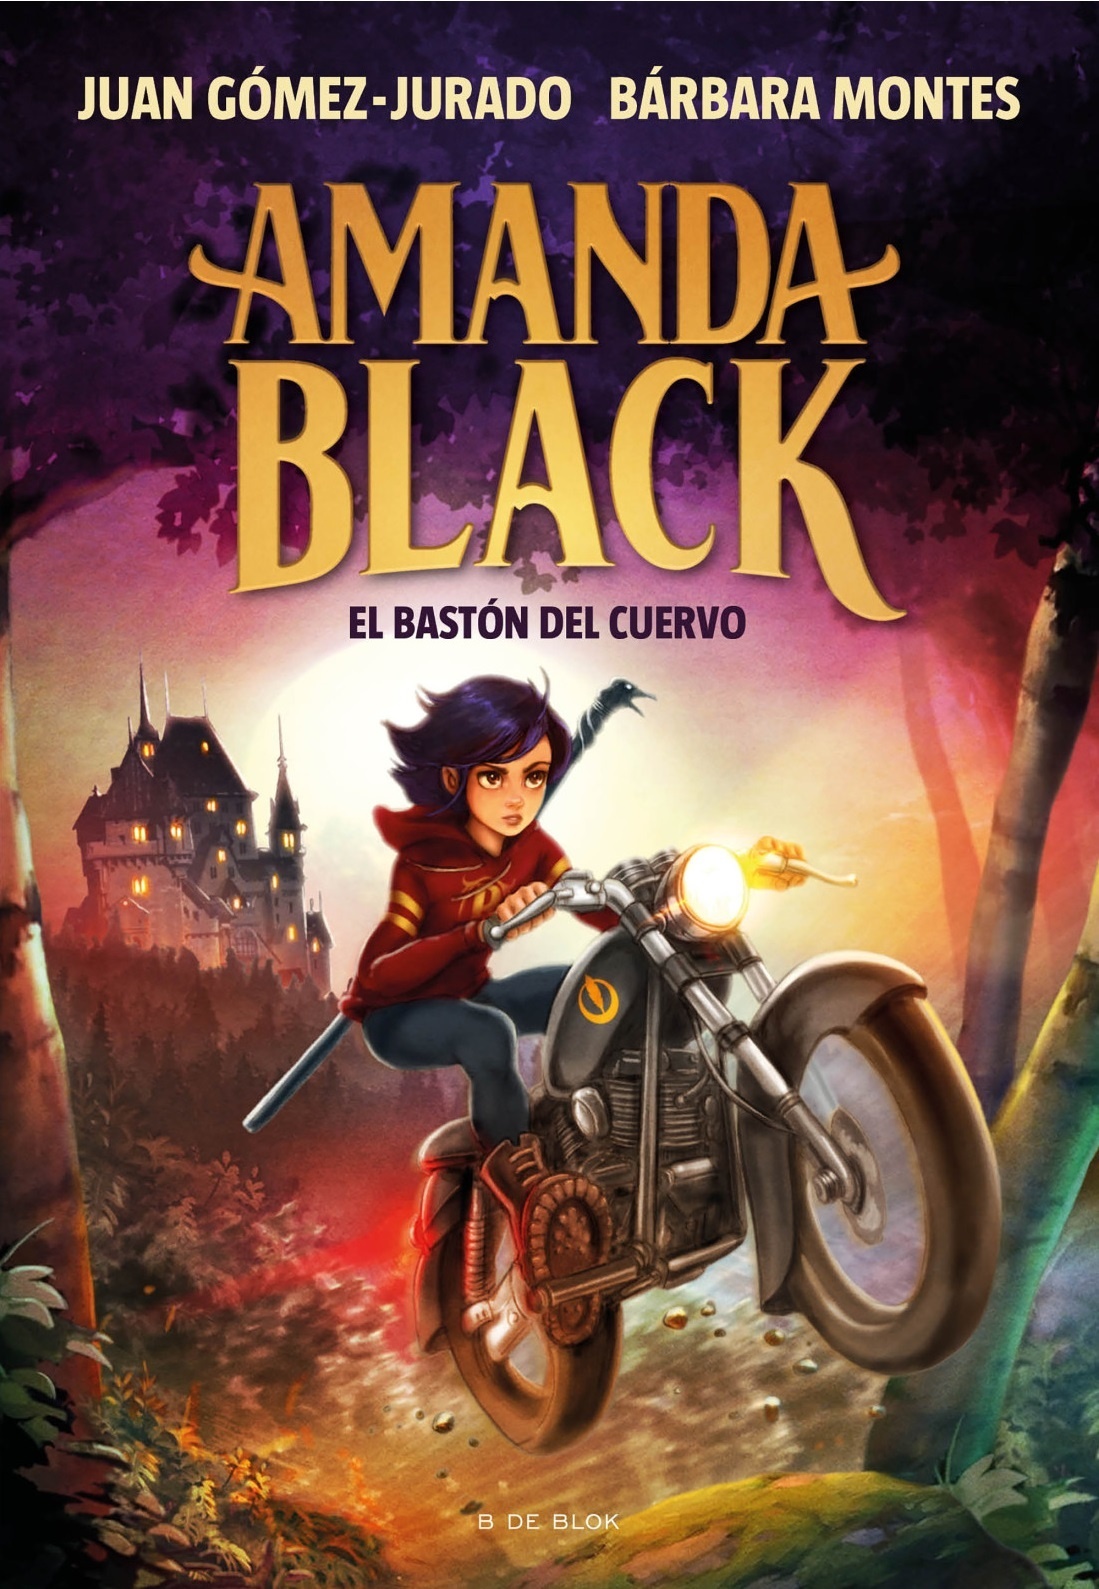 Bastón del cuervo, El "Amanda Black 7"